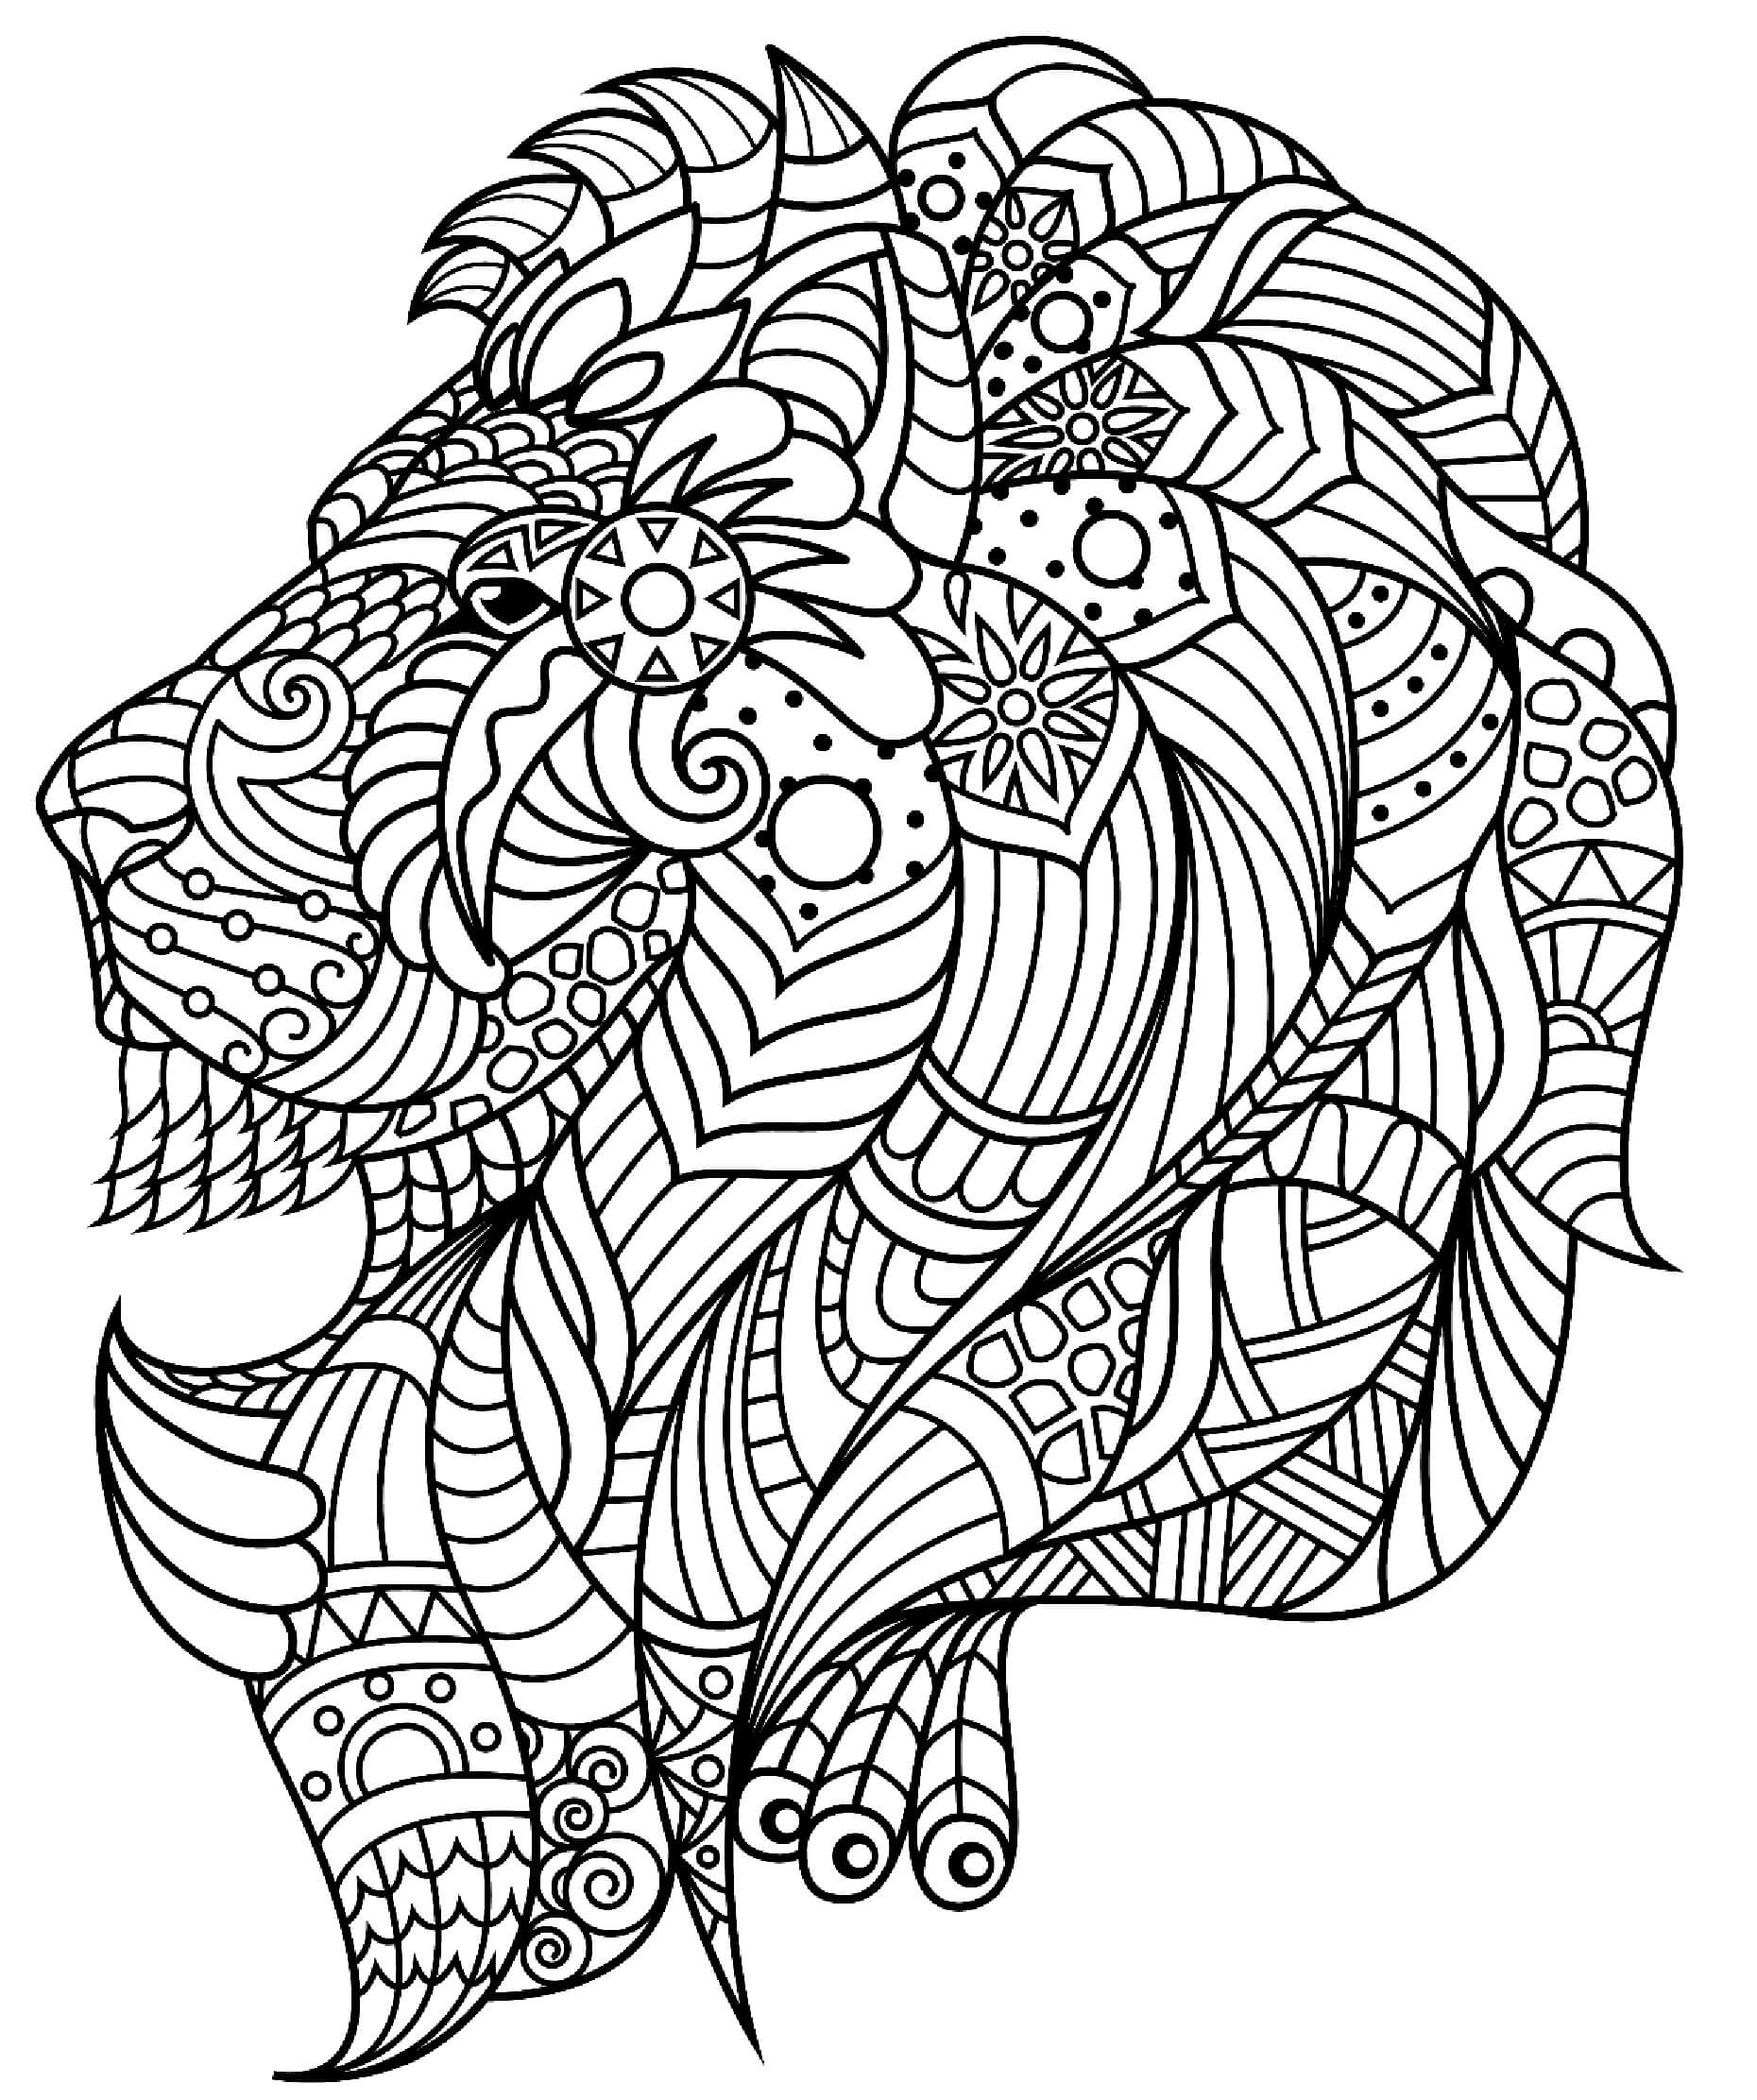 Mandala Lion Coloring Page - Sheet 4 Mandalas